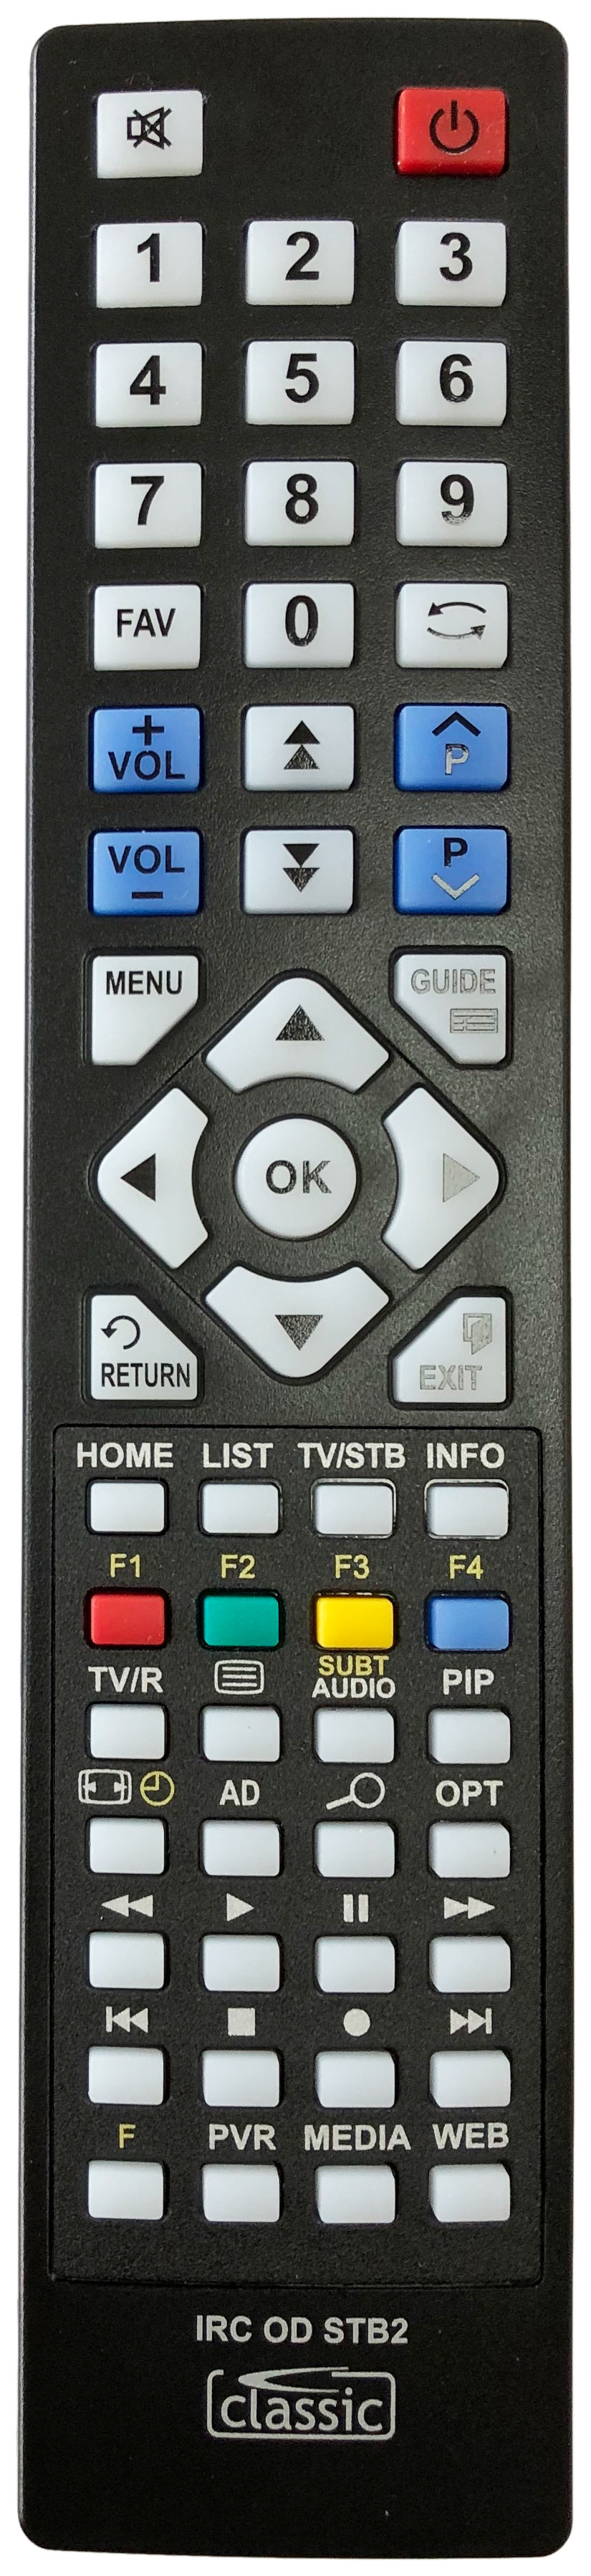 HUMAX RM-106 Remote Control